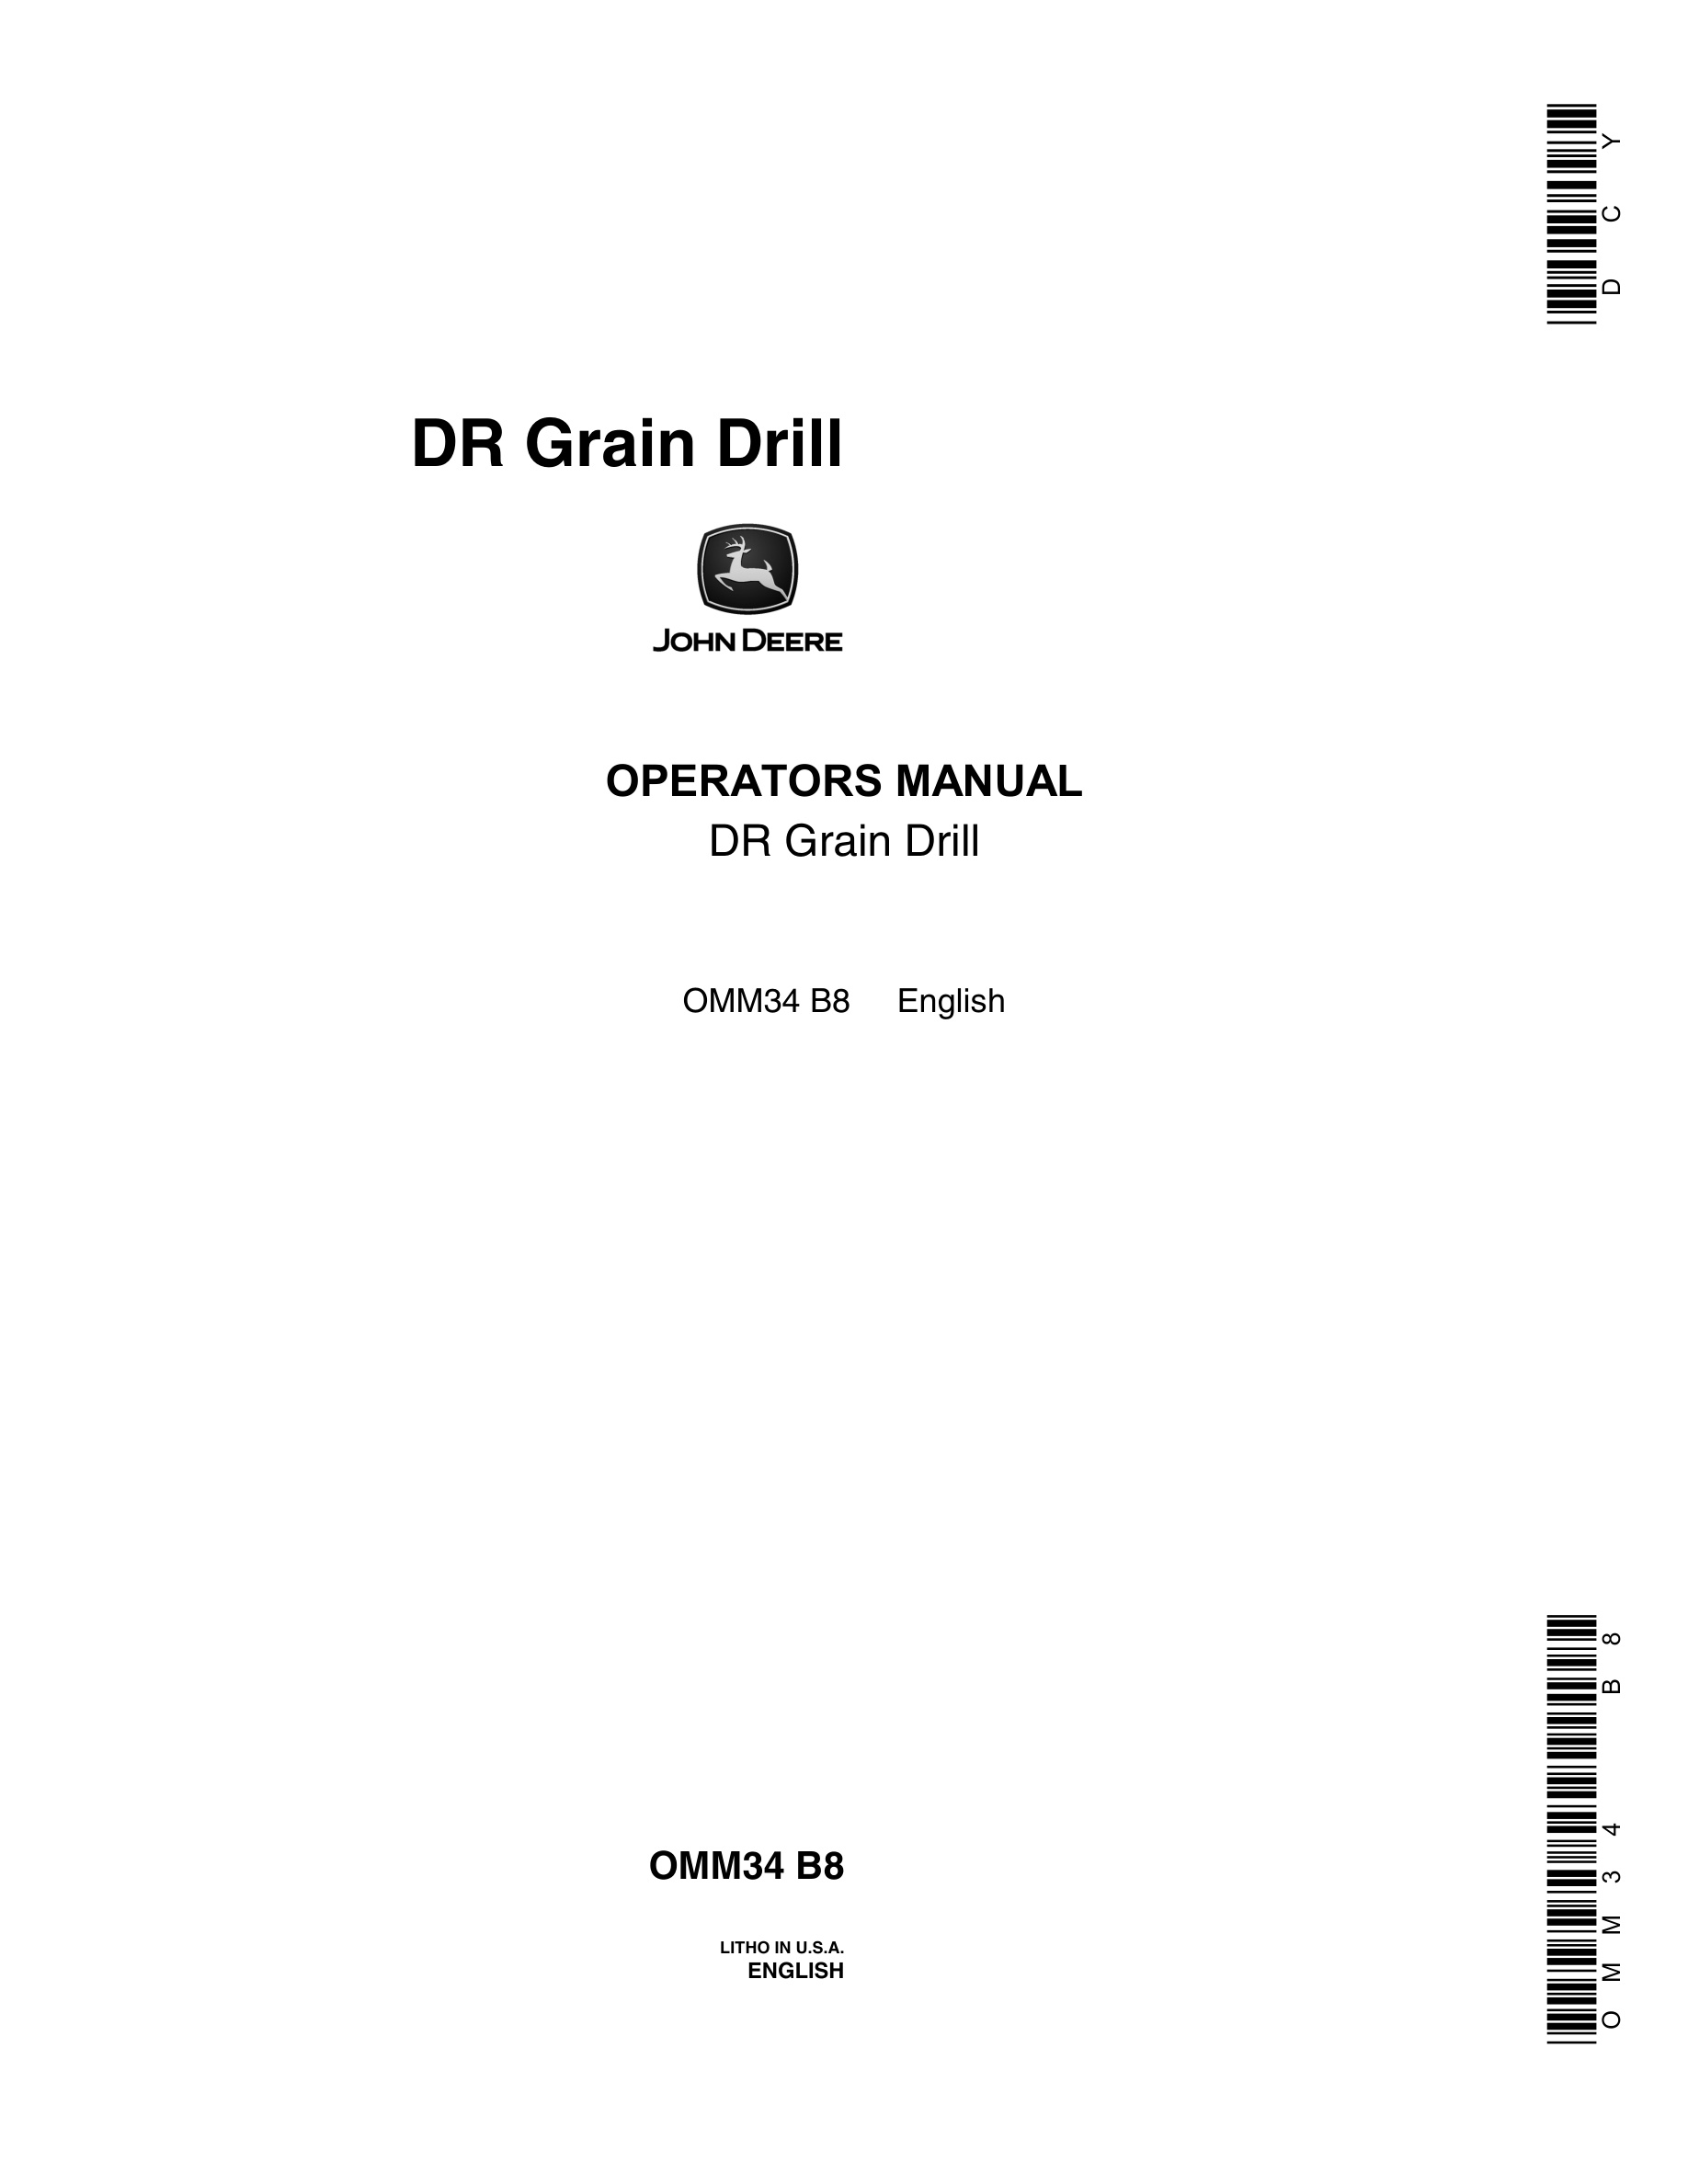 John Deere DR Grain Drill Operator Manual OMM34-1